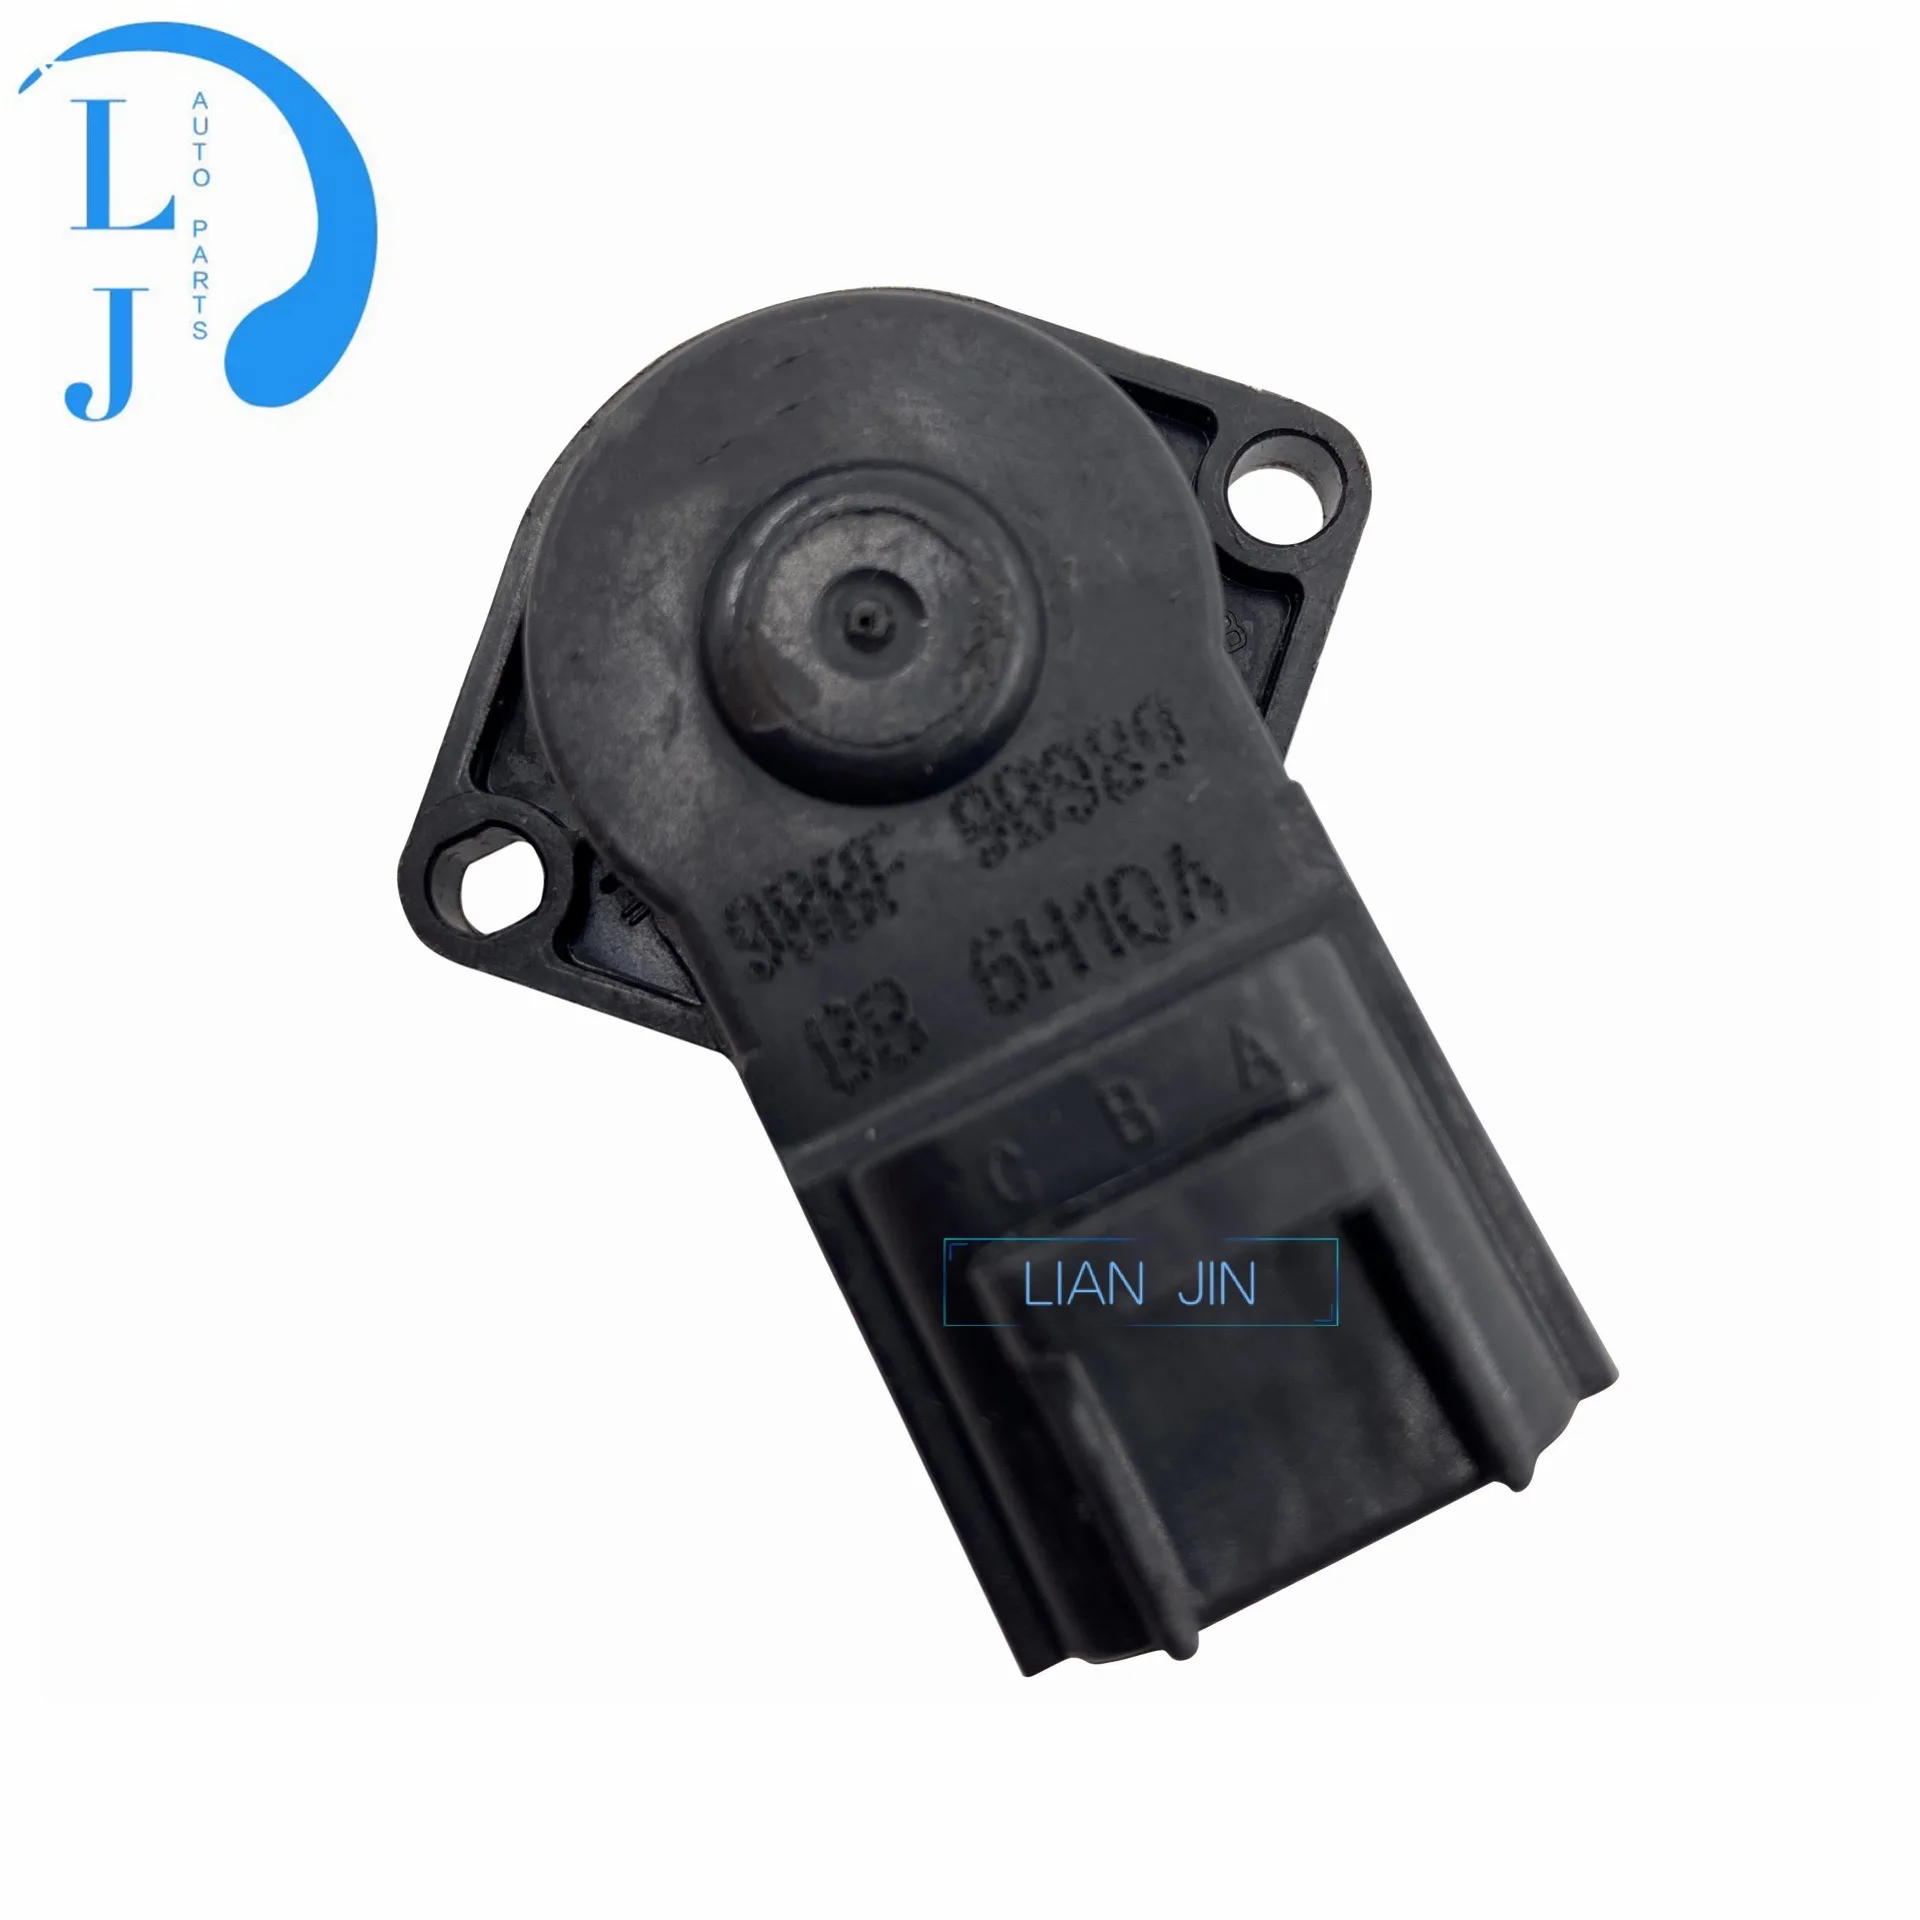 

988F 9B989 BB NEW T.P.S Switch Control Signal Sensor FOR Escape Mariner Mazda Mercury Ford Focus 3 PIN